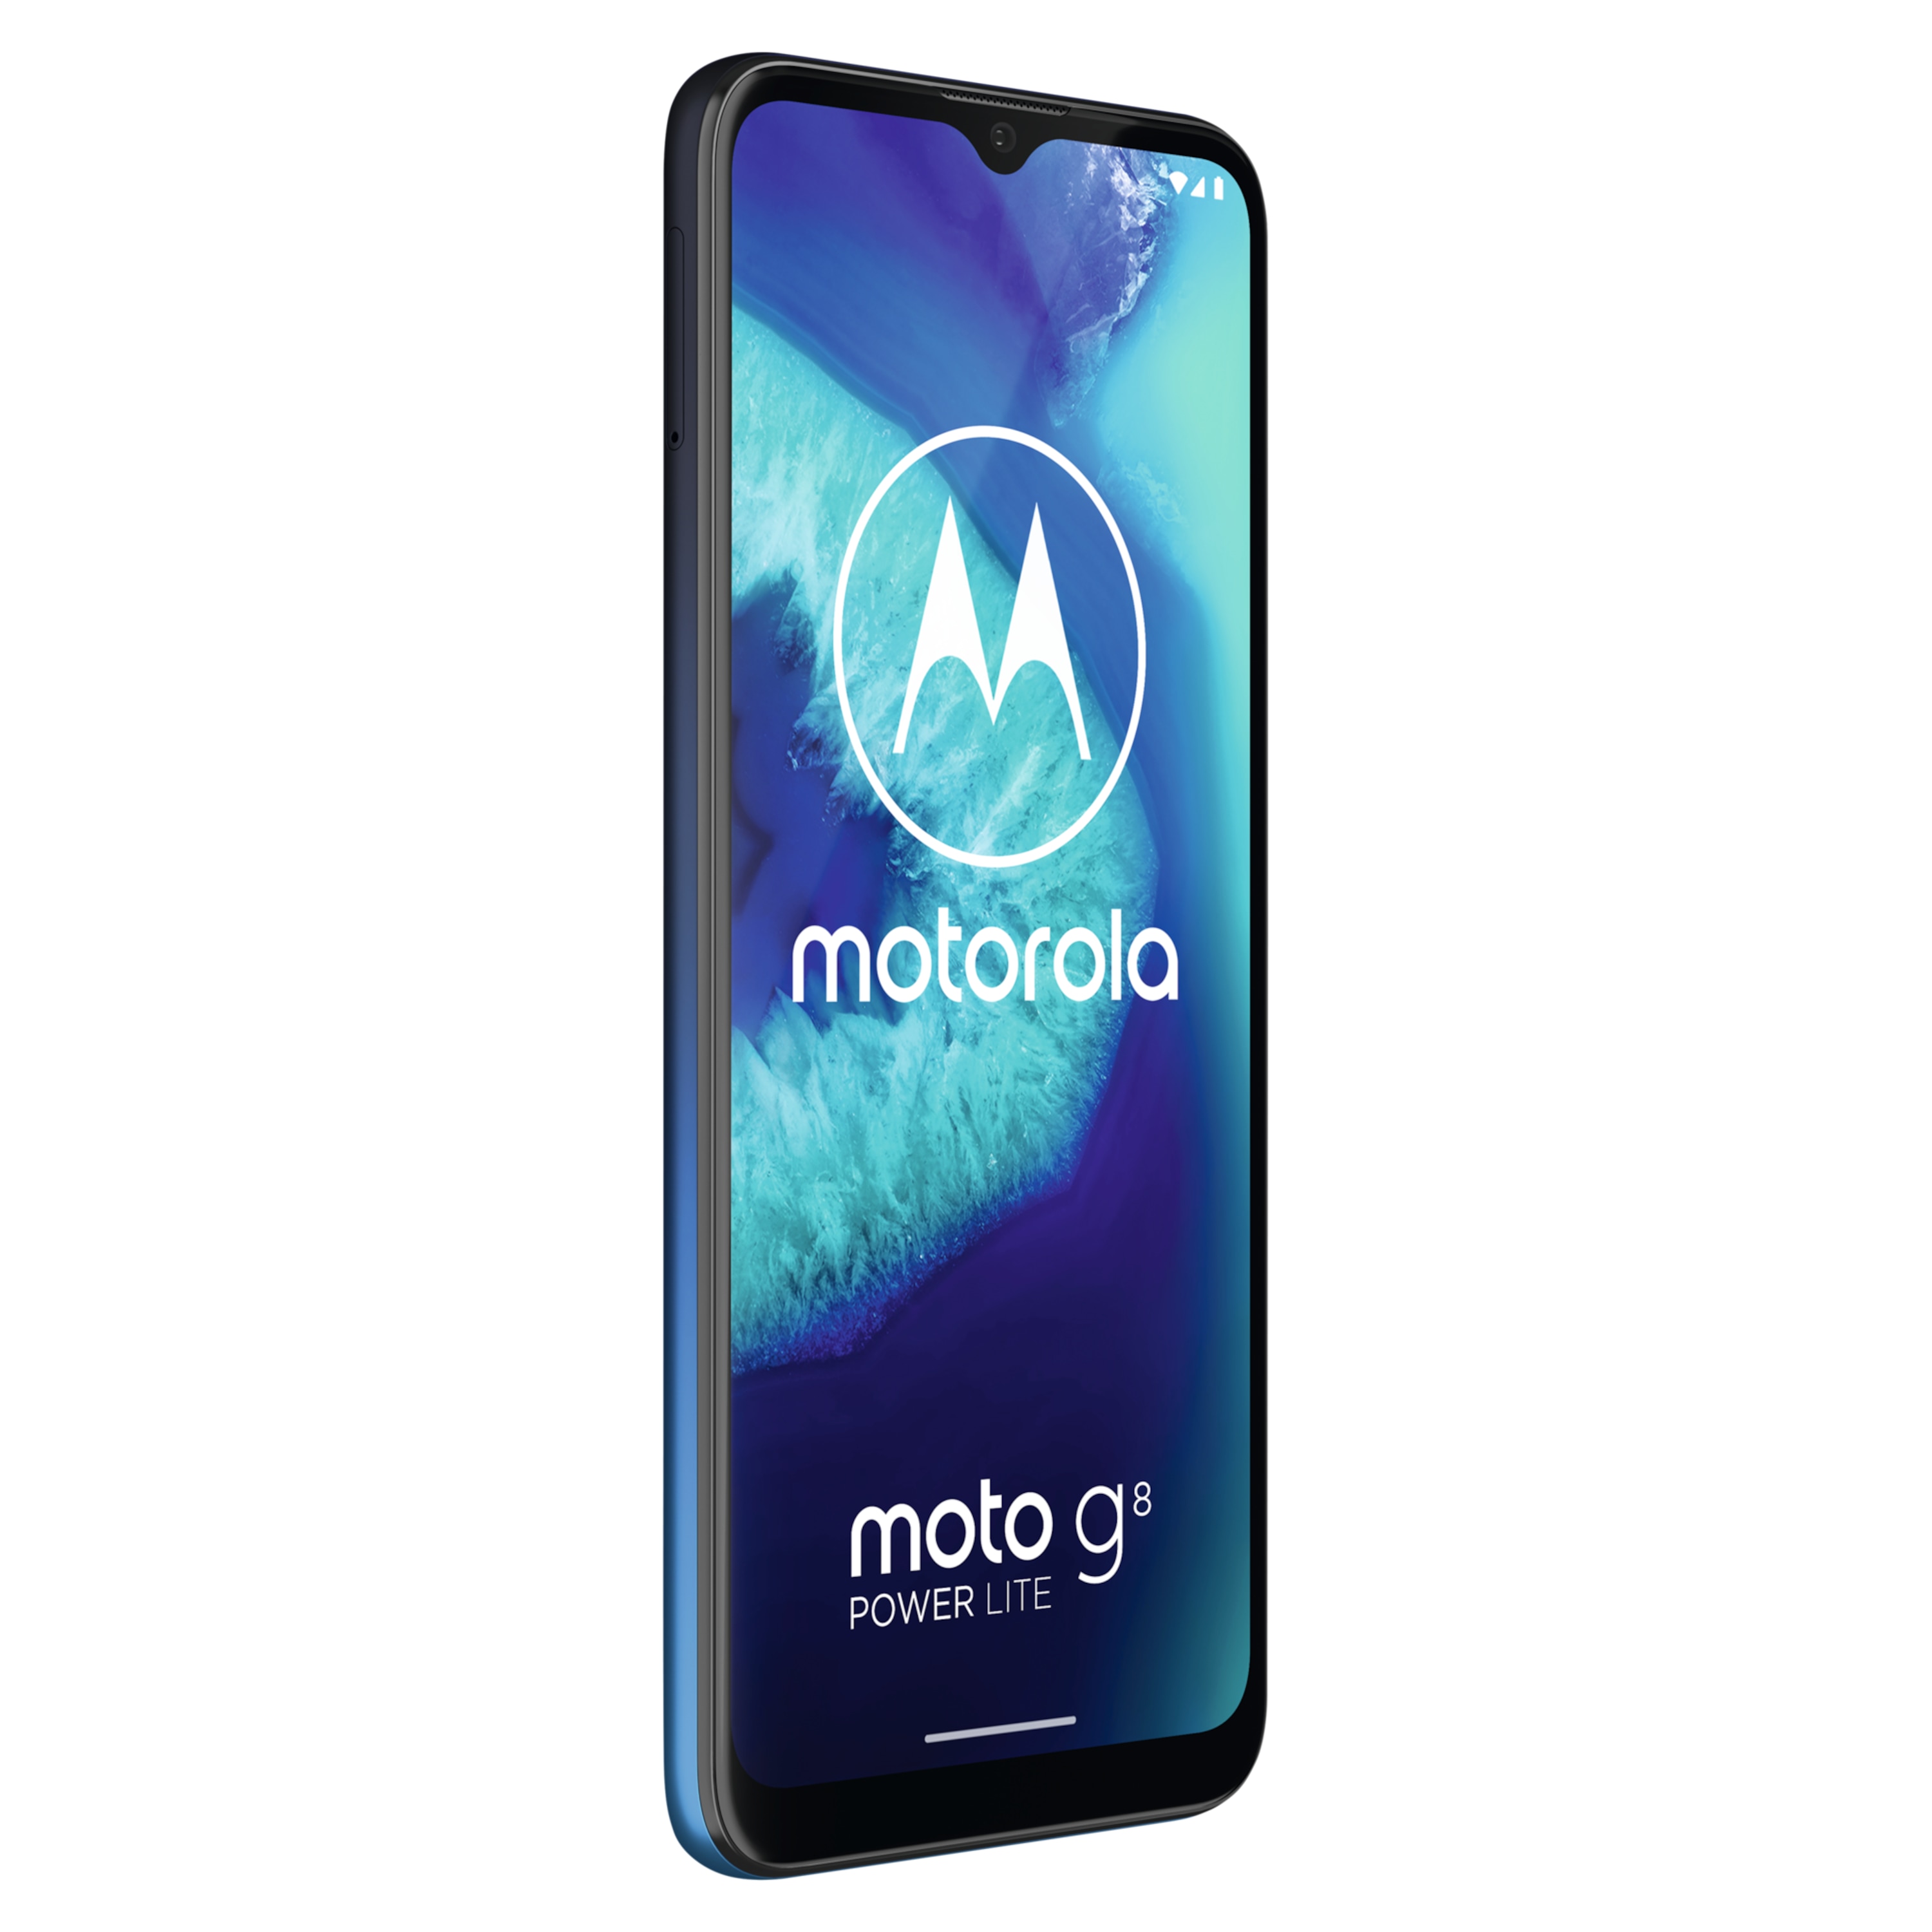 MOTOROLA moto g8 power lite Smartphone, 16,51 cm (6,5") HD+ Display, Android™ 10, 64 GB Speicher, Octa-Core-Prozessor, Dual-SIM, Bluetooth® 4.2